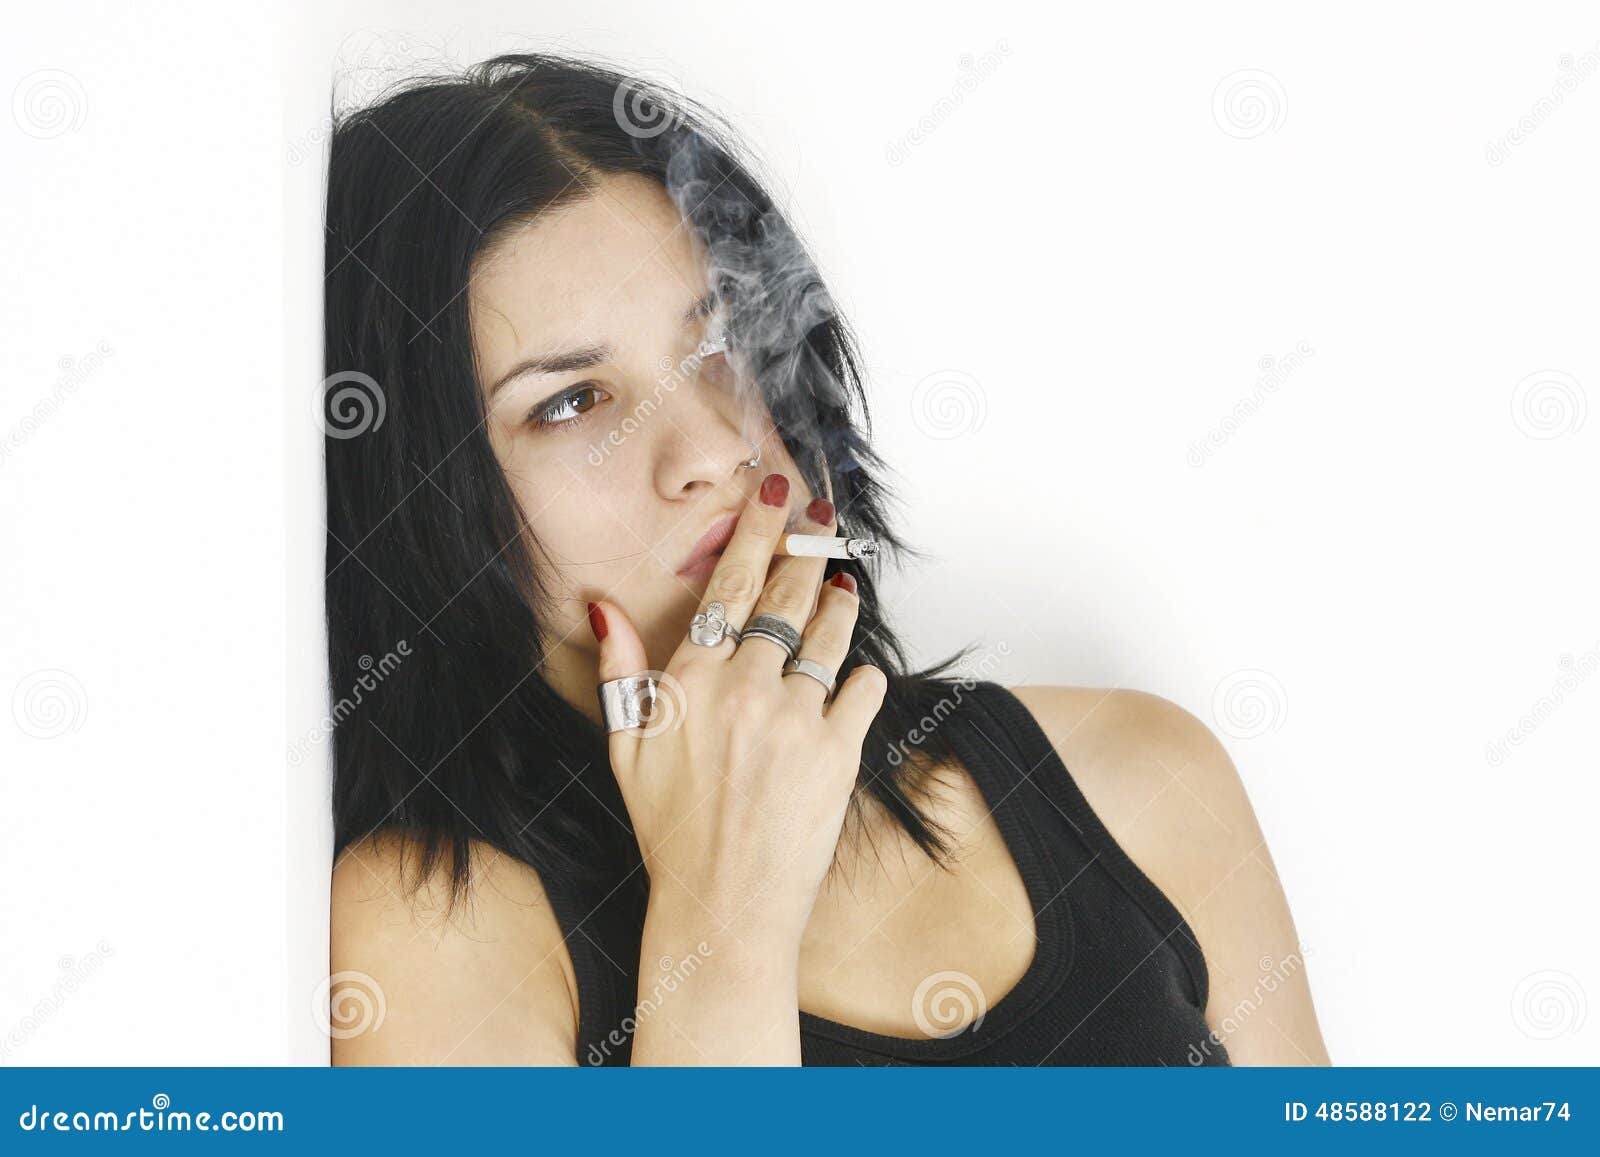 A055639-人物-时尚-黑白美女-抽烟 - 高清壁画素材-壁画_电视背景墙_沙发背景墙_壁画素材